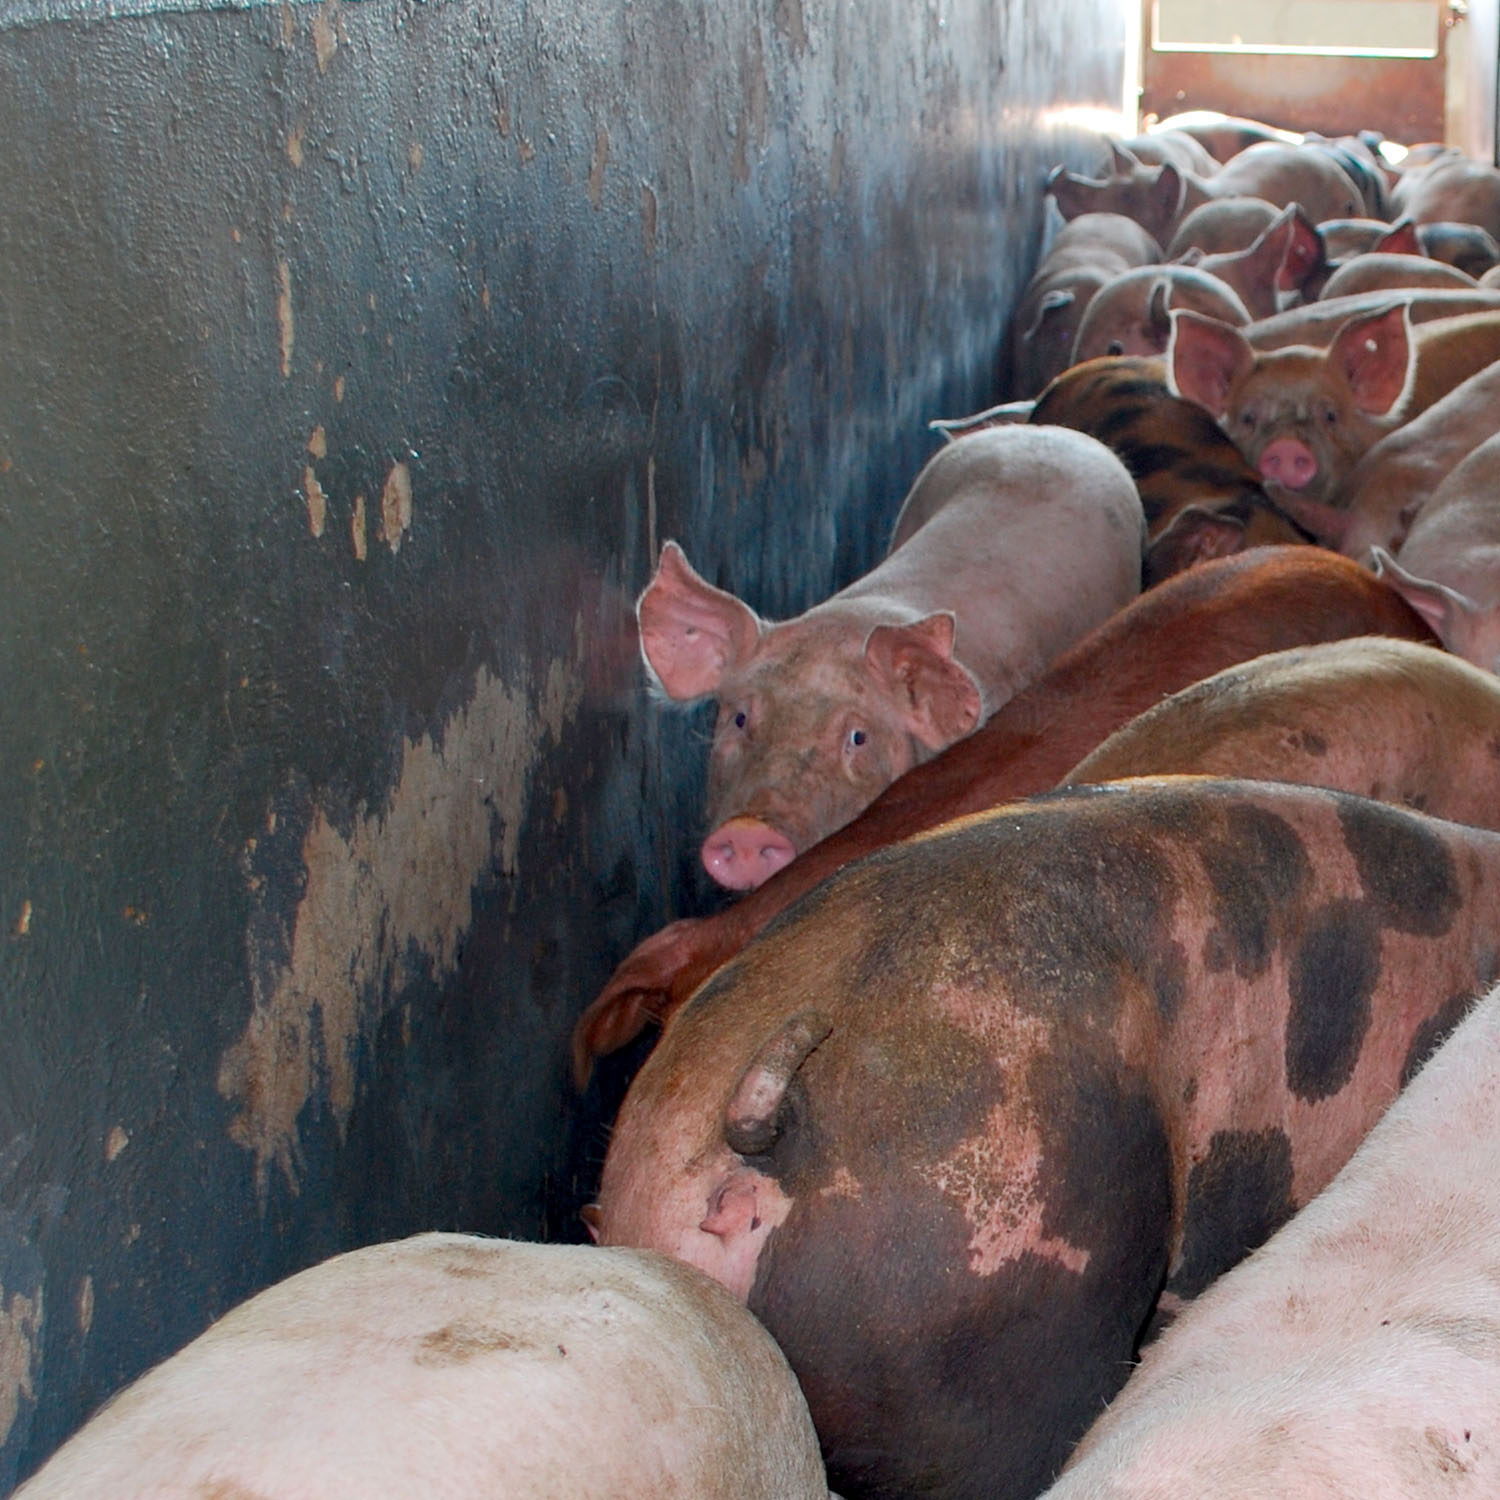 Cerdos en un mataderos en España esperando en un pasillo a ser aturdidos por el método de CO2.